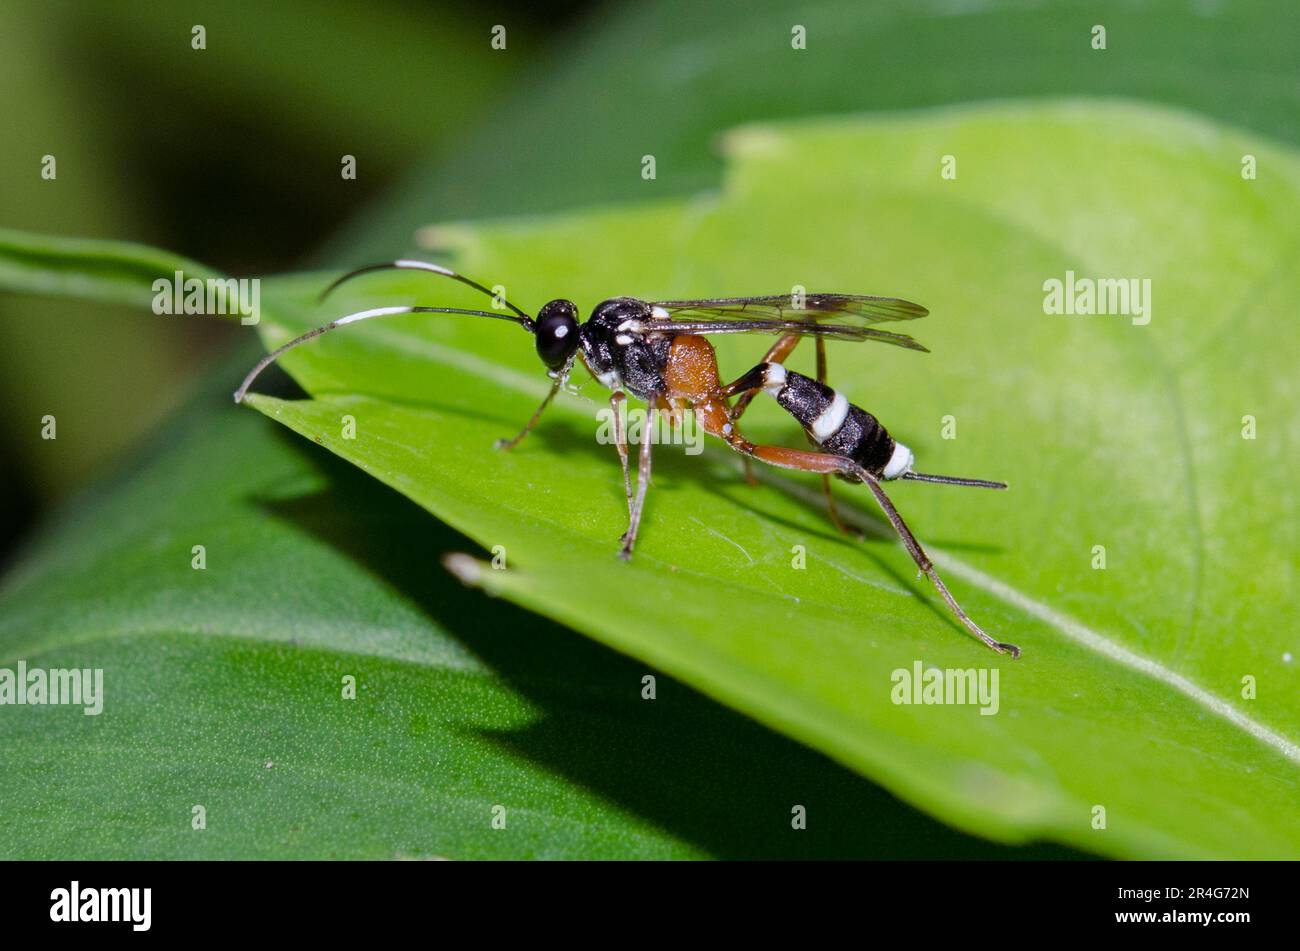 Parasitoid Wasp, Ichneumonidae Family, with ovipositor, Klungkung, Bali, Indonesia Stock Photo